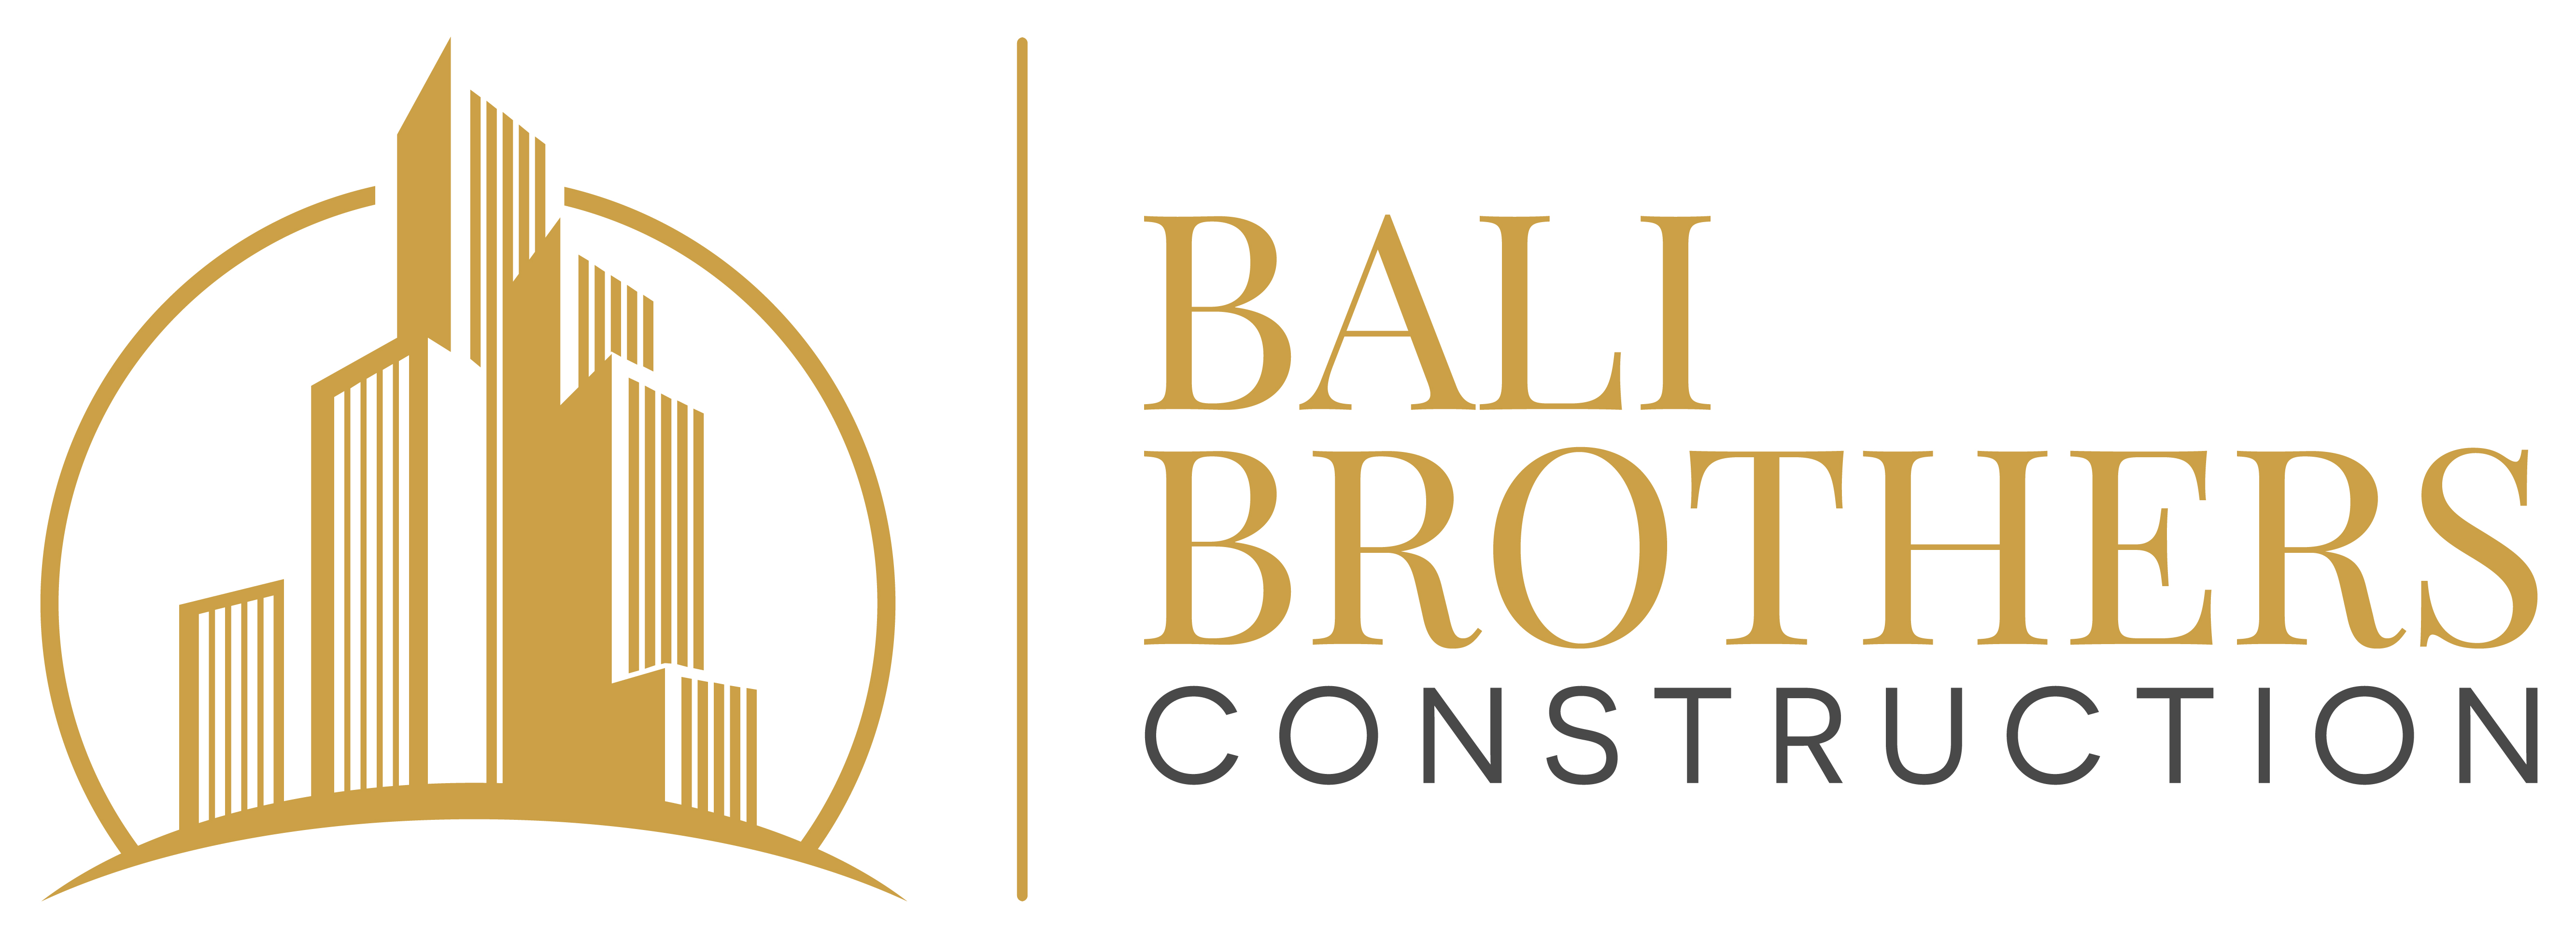 Bali Brothers Construction Ltd.